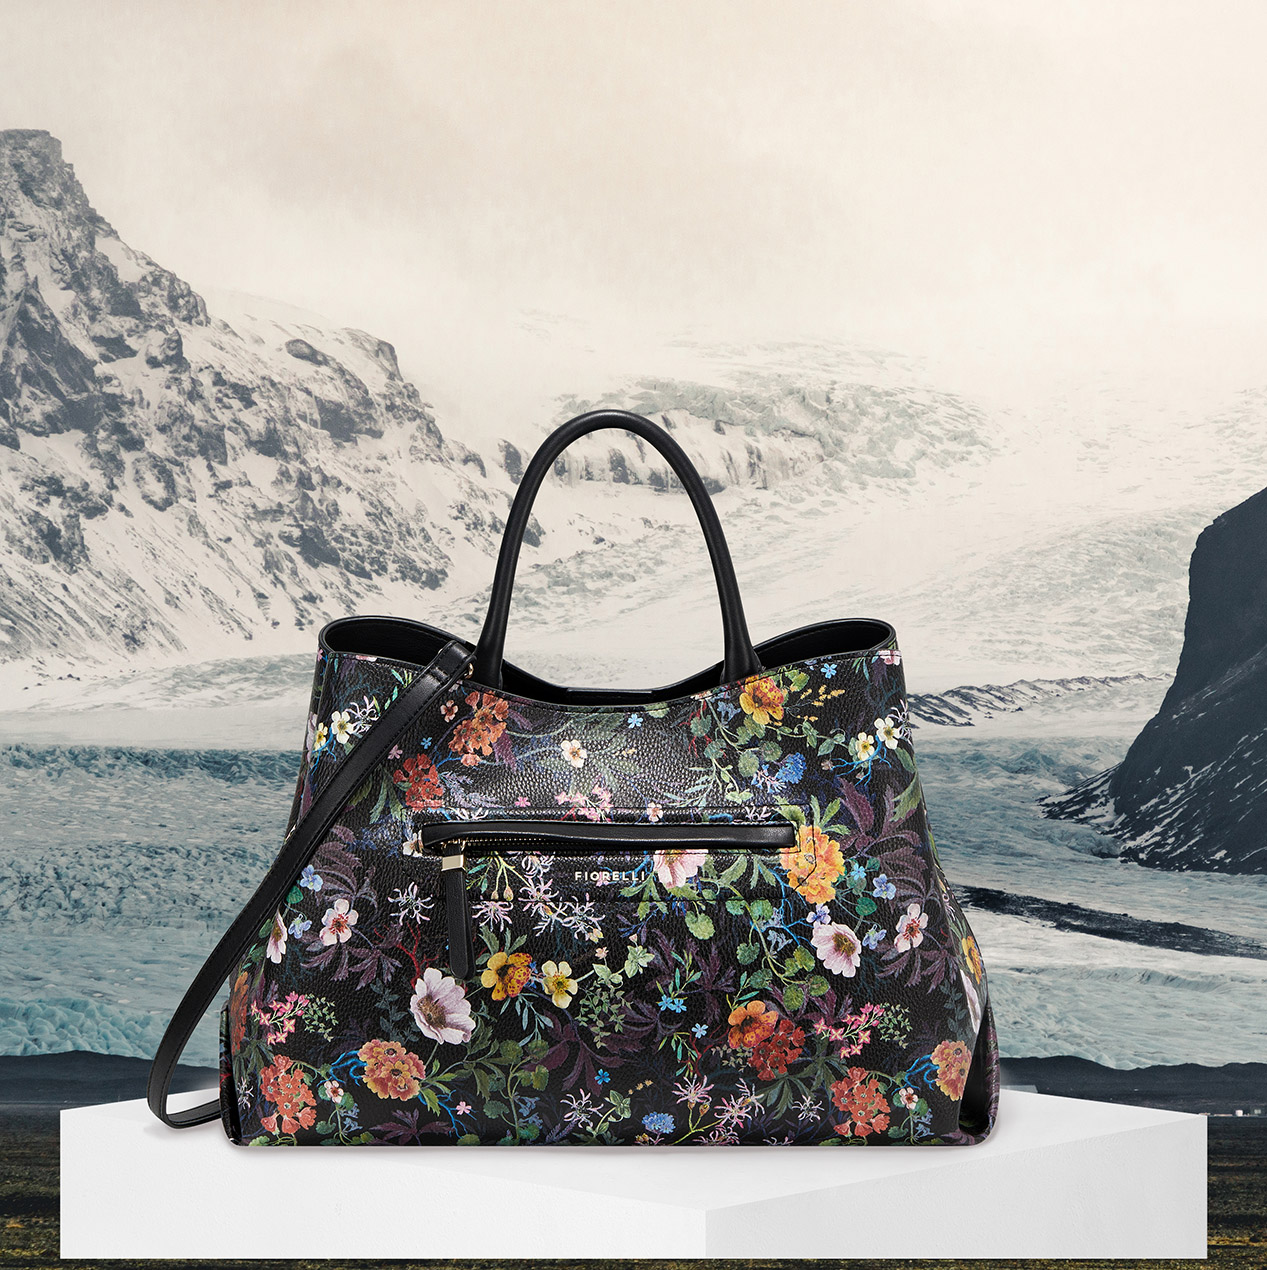 Dark winter botanical floral print by Em Prov, featured on Fiorelli handbag